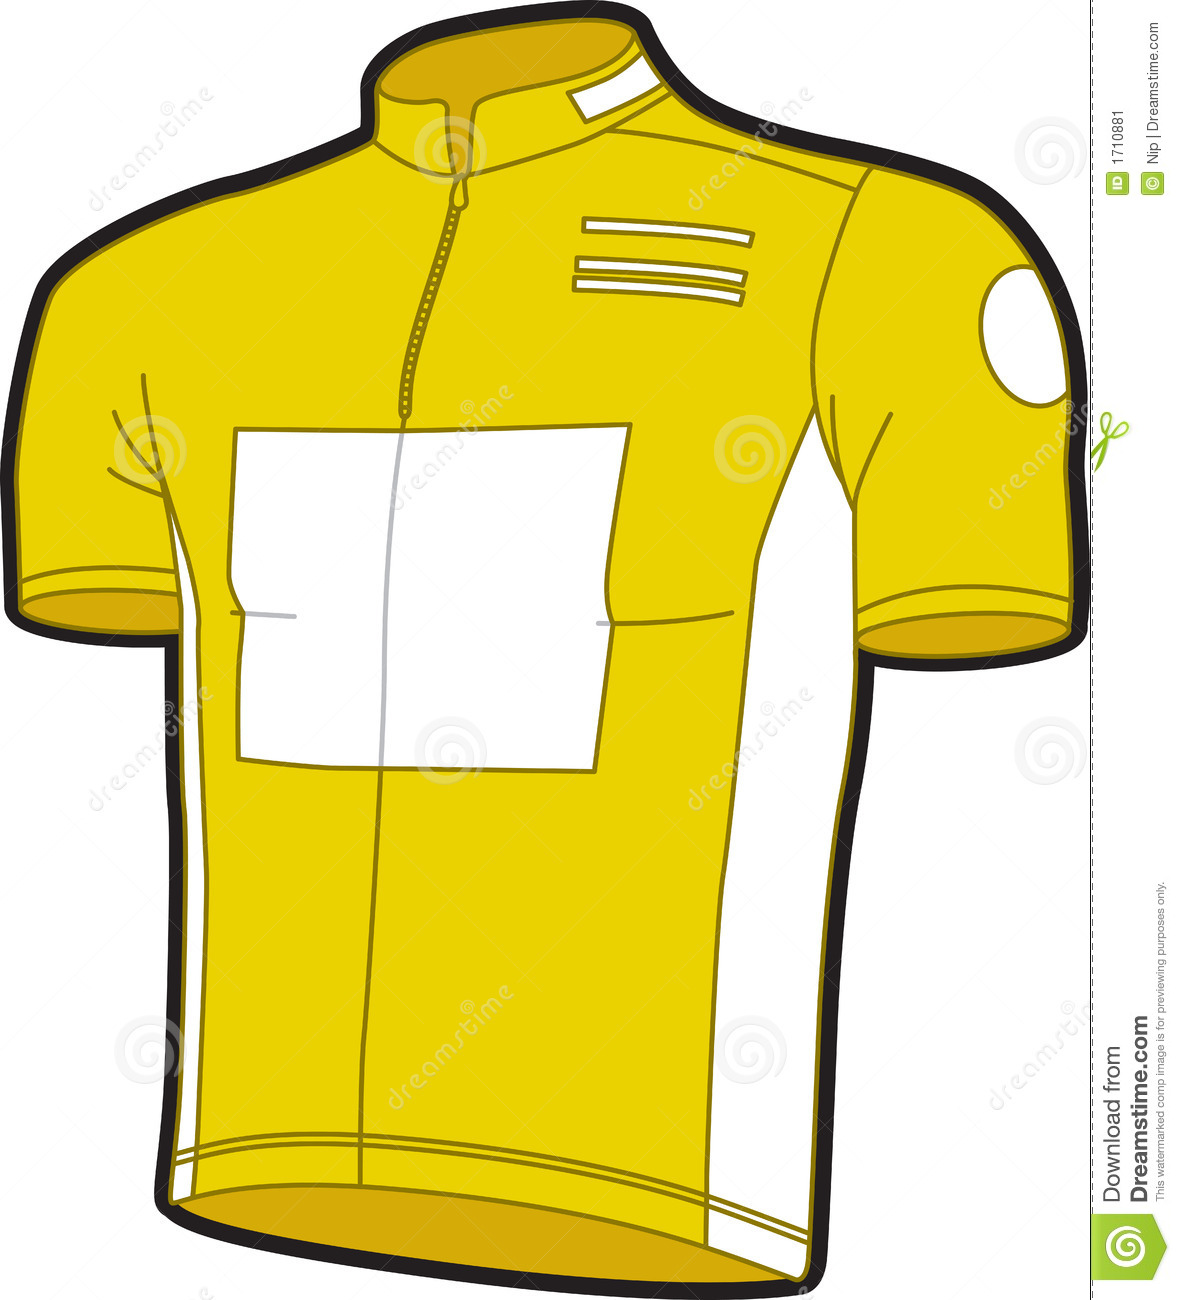 Bike Jersey Stock Image   Image  1710881